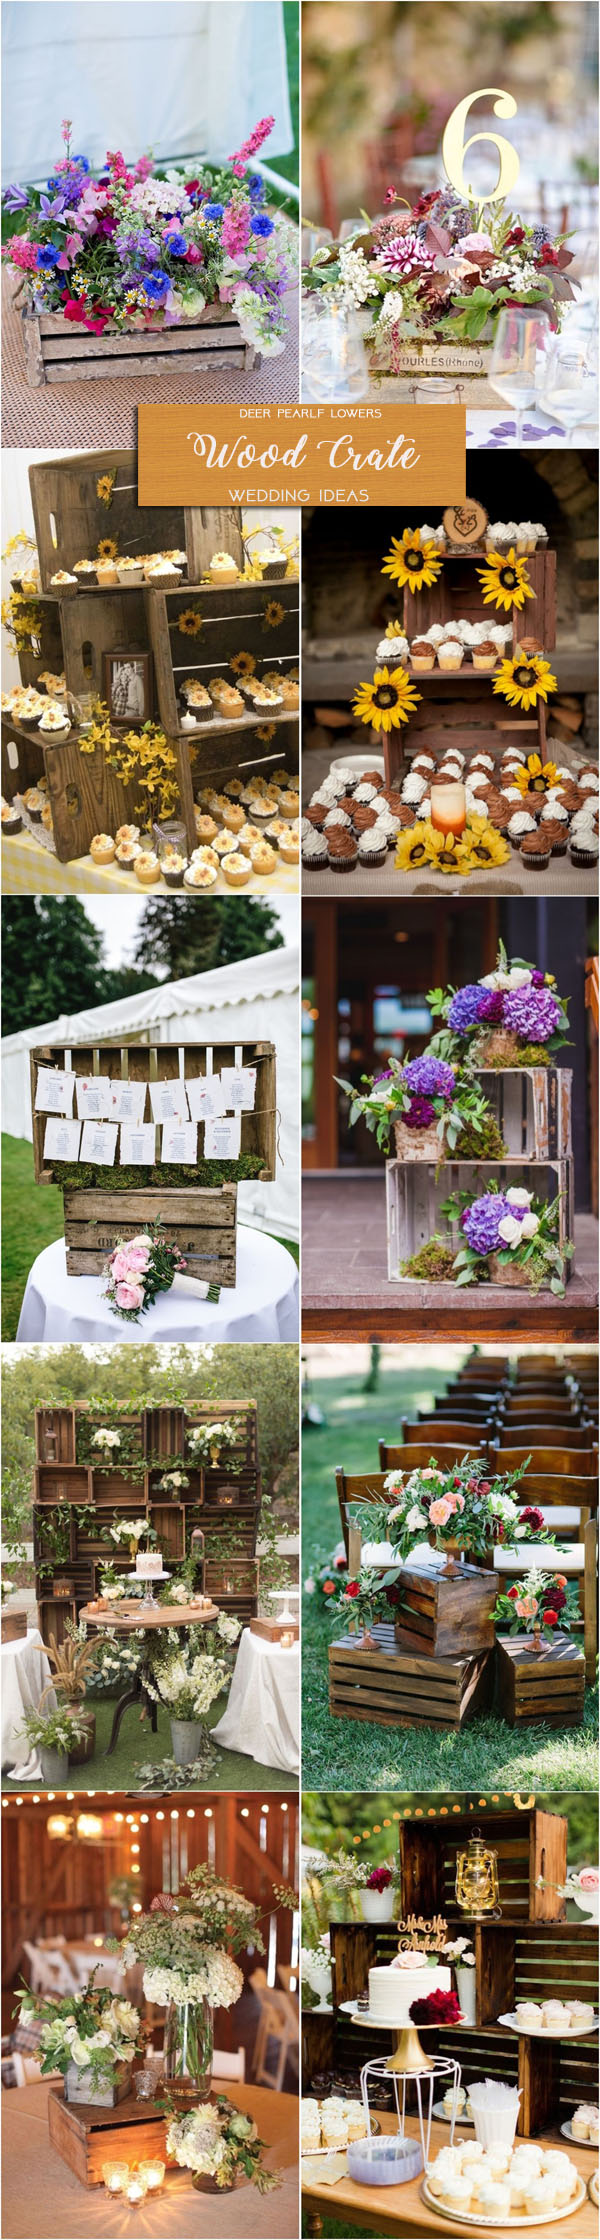 Rustic country wedding ideas - wooden crate wedding centerpieces & decor